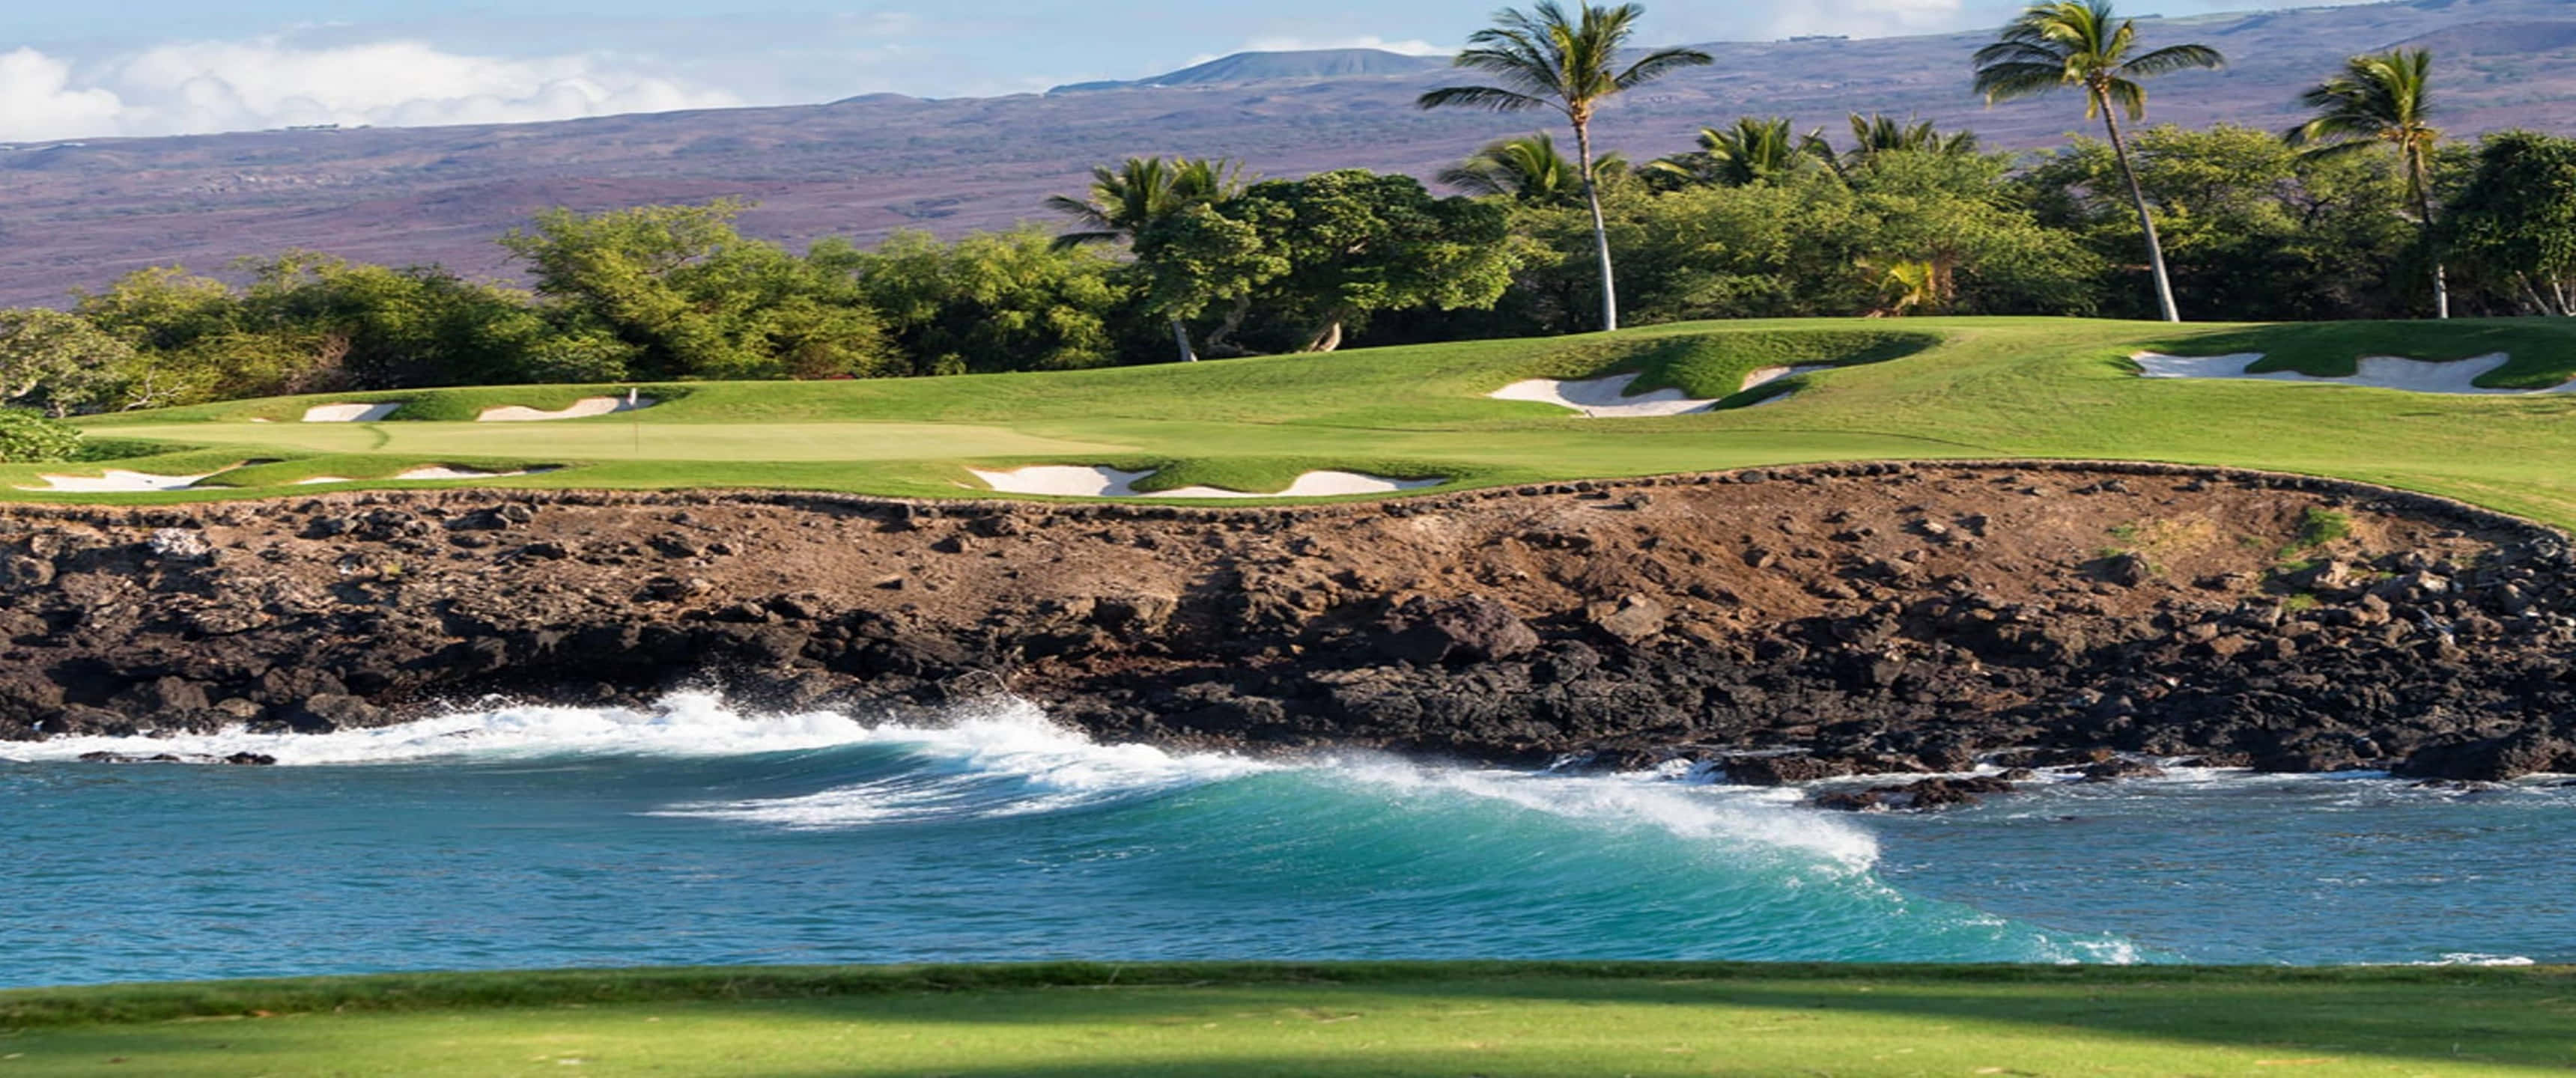 Mauna Kea 3440x1440p Golf Course Background